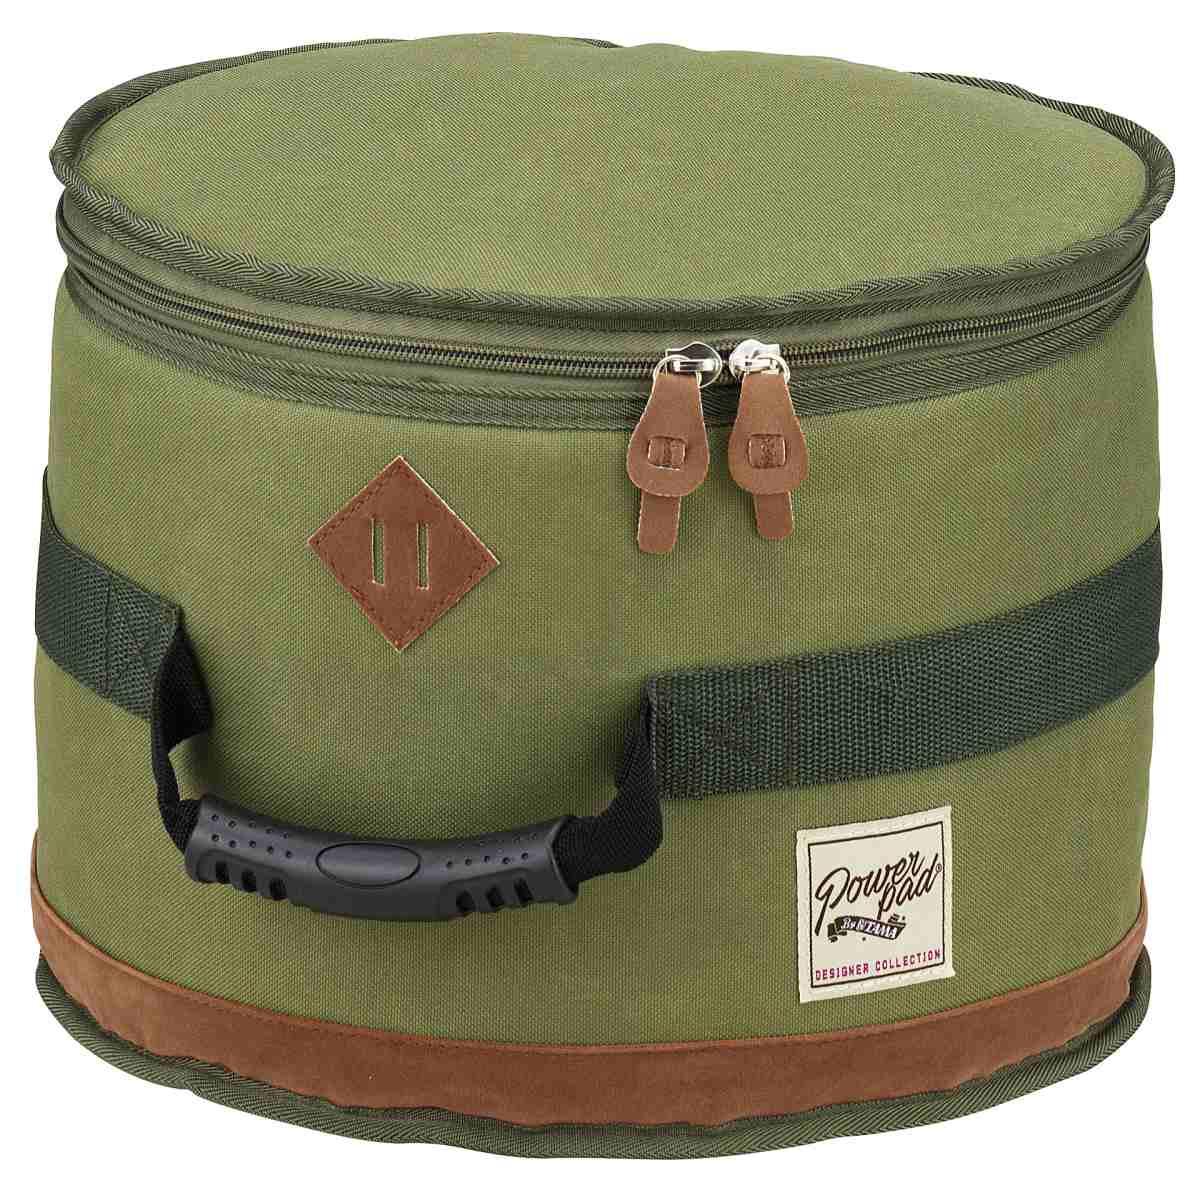 TAMA TSBF14MG Power Pad Designer Collection Drum Bag for 14"x14" Floor Tom, Moss Green